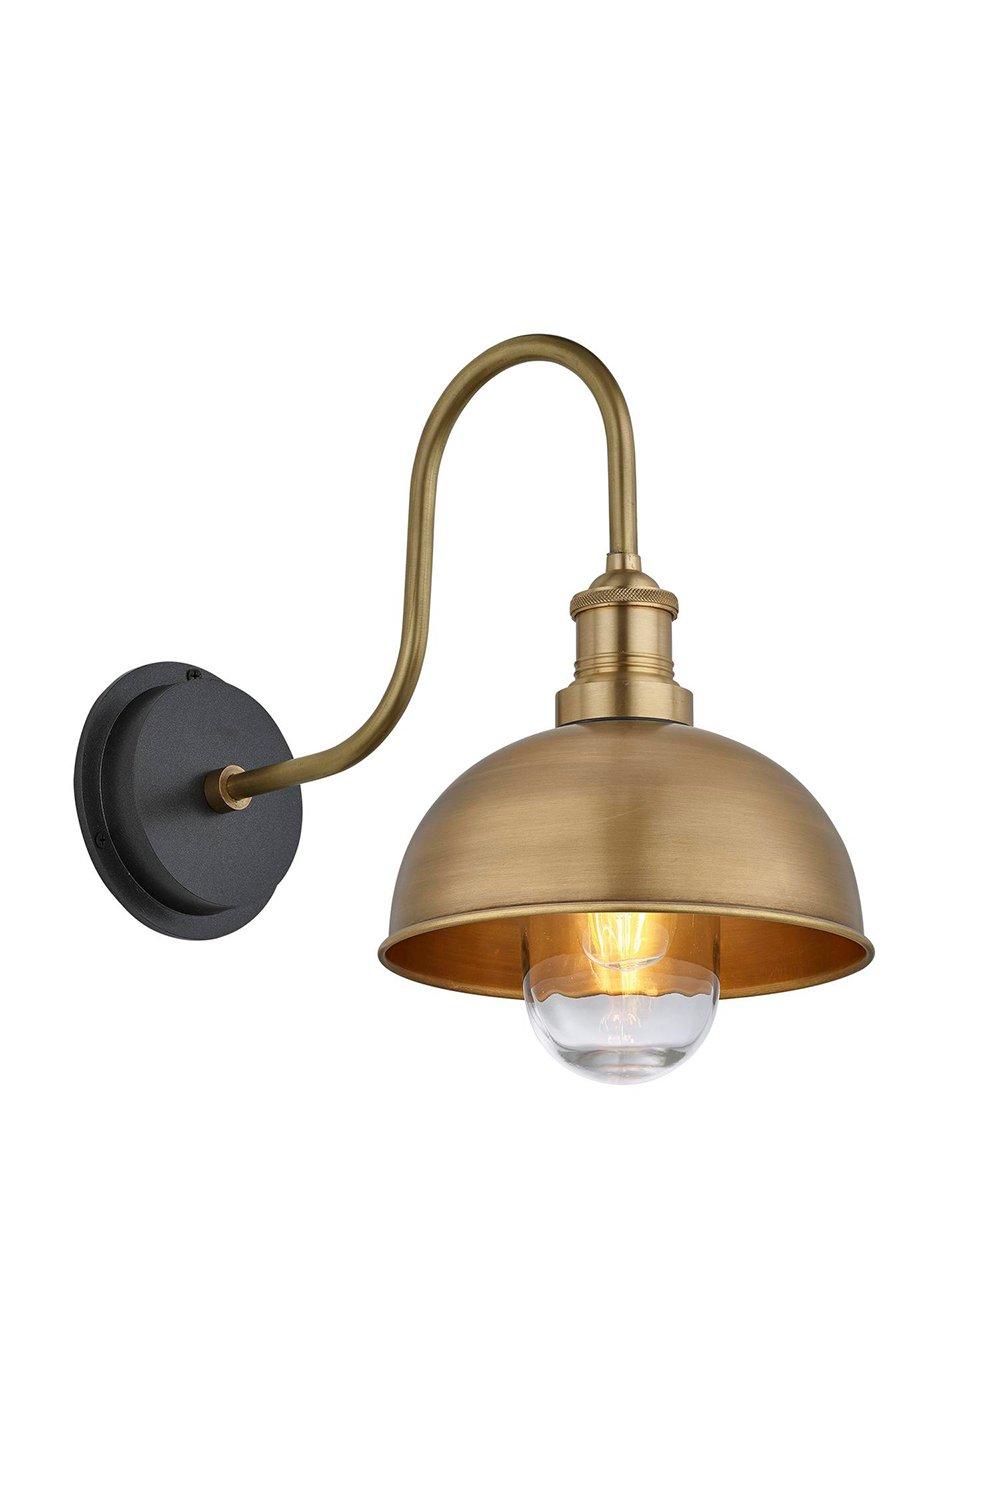 Swan Neck Outdoor & Bathroom Dome Wall Light, 8 Inch, Brass, Brass Holder